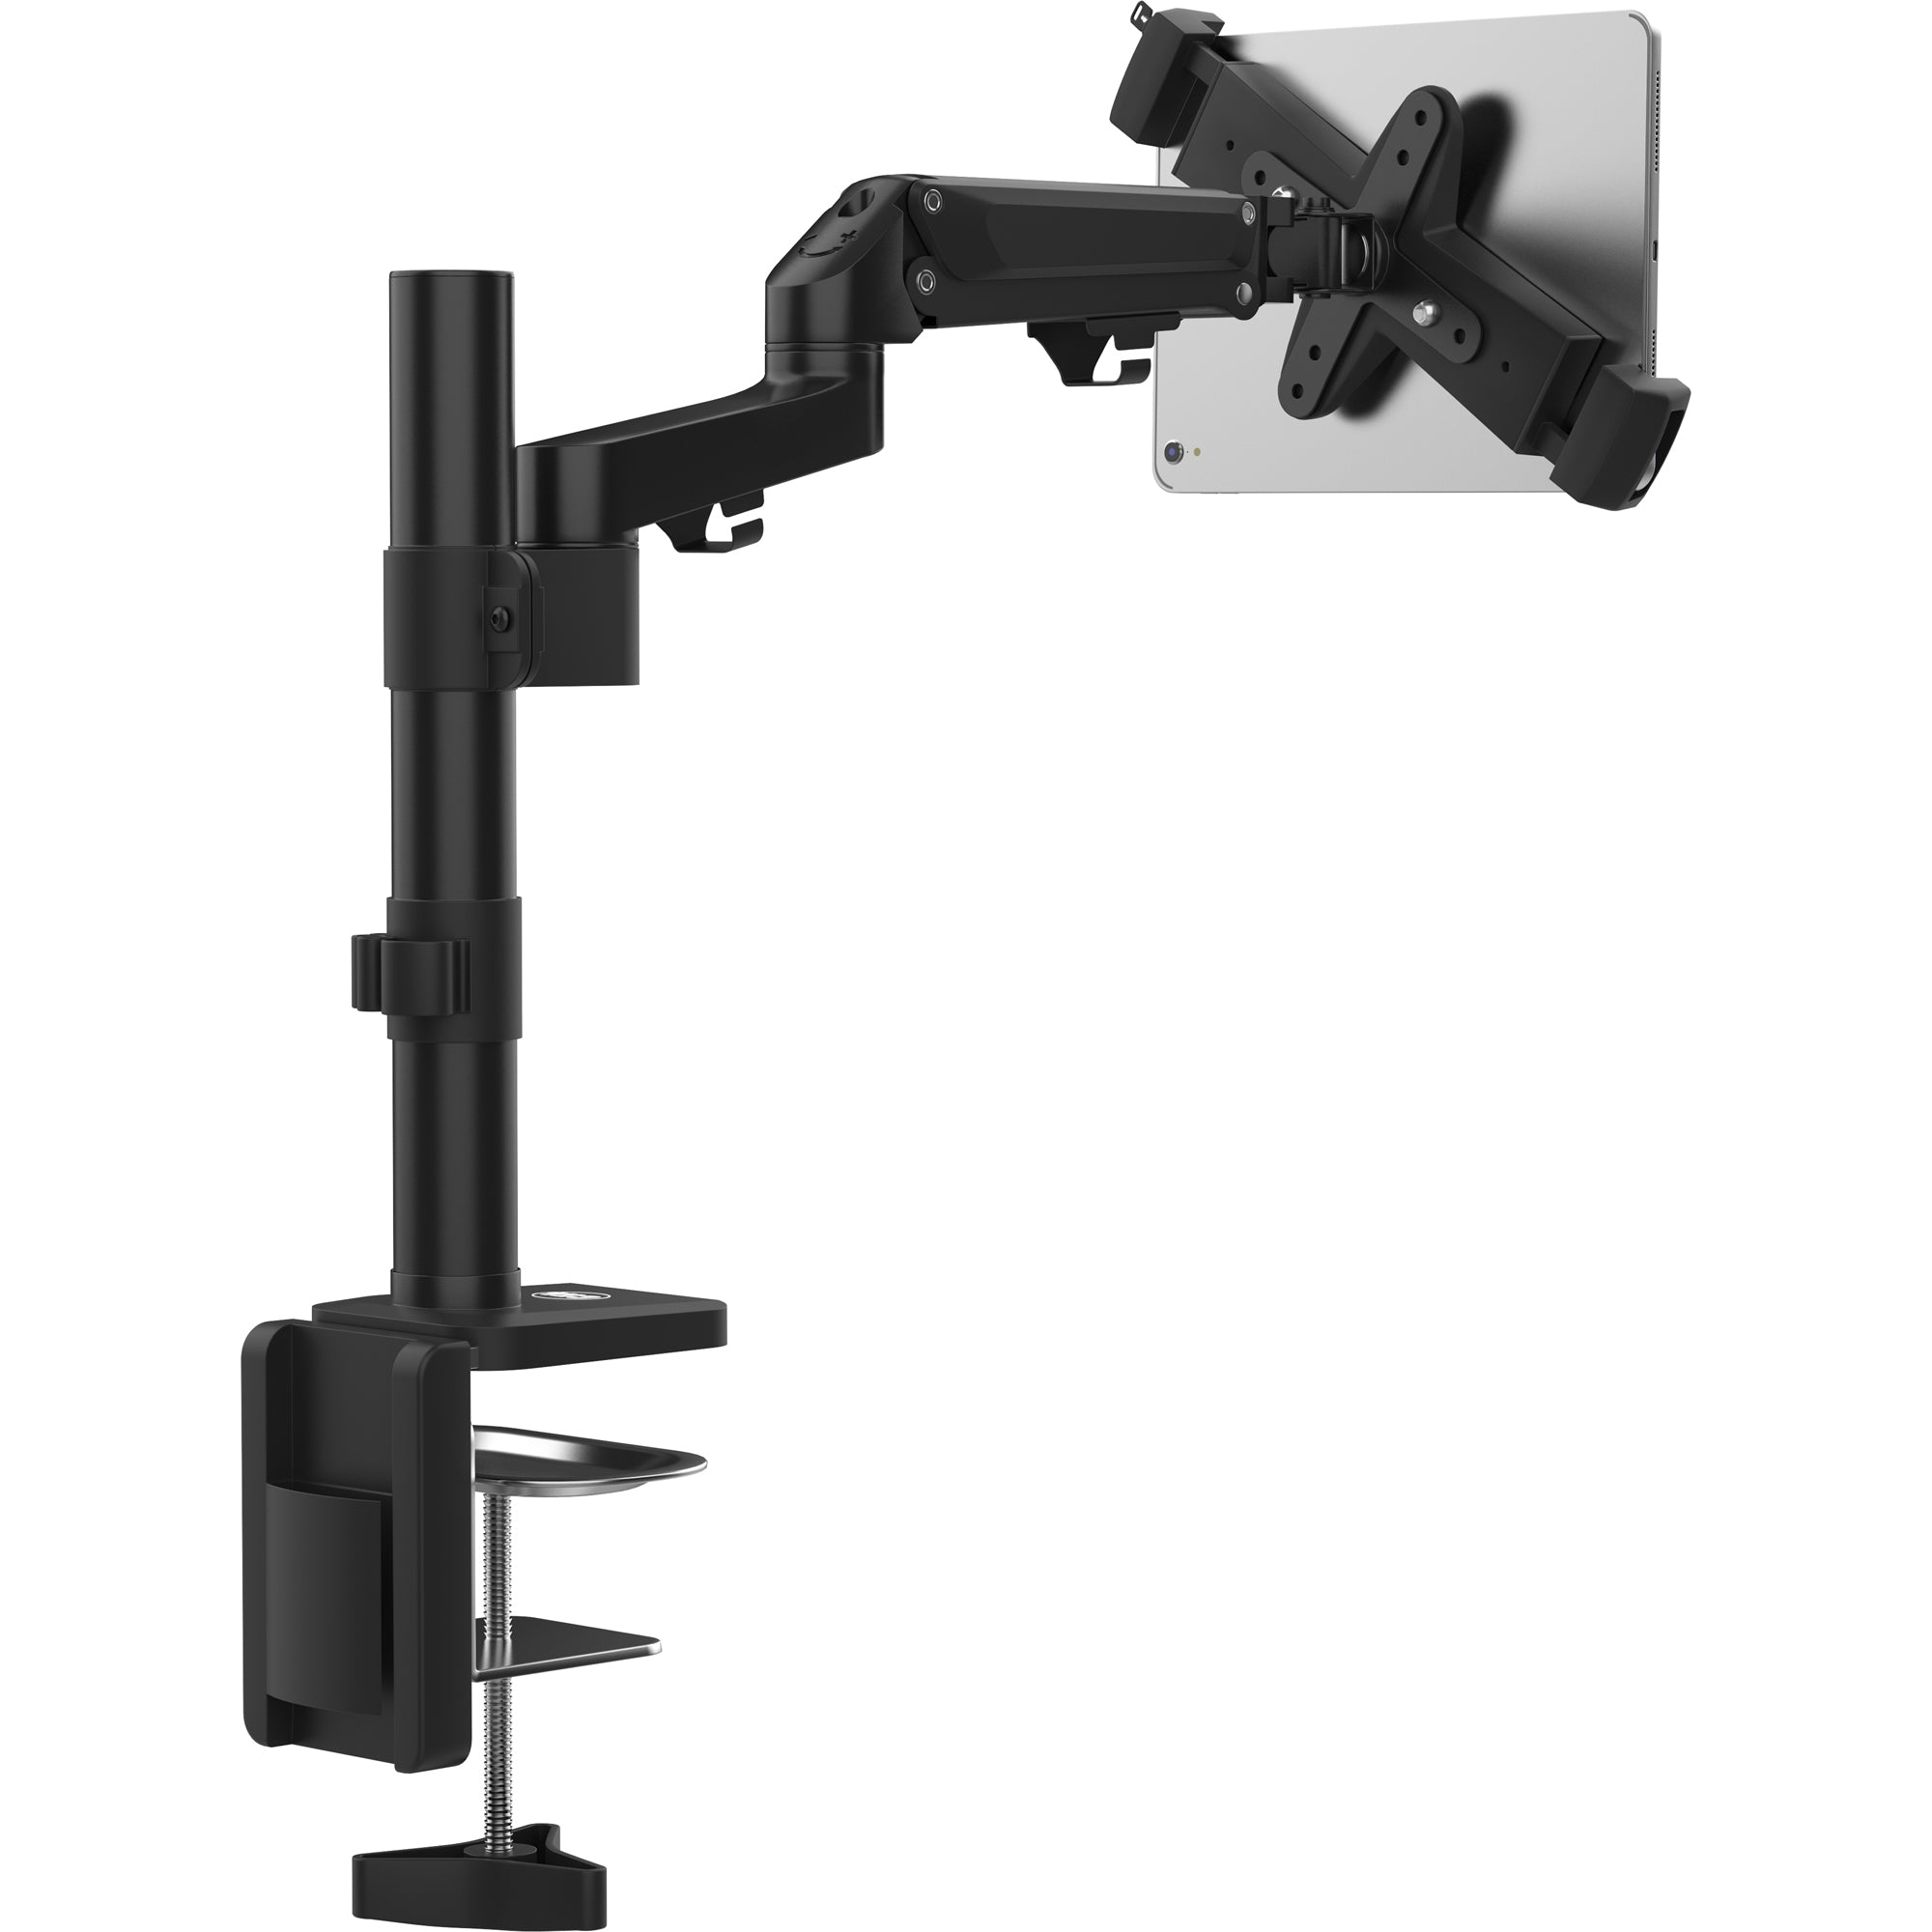 Counterbalance Monitor Arm